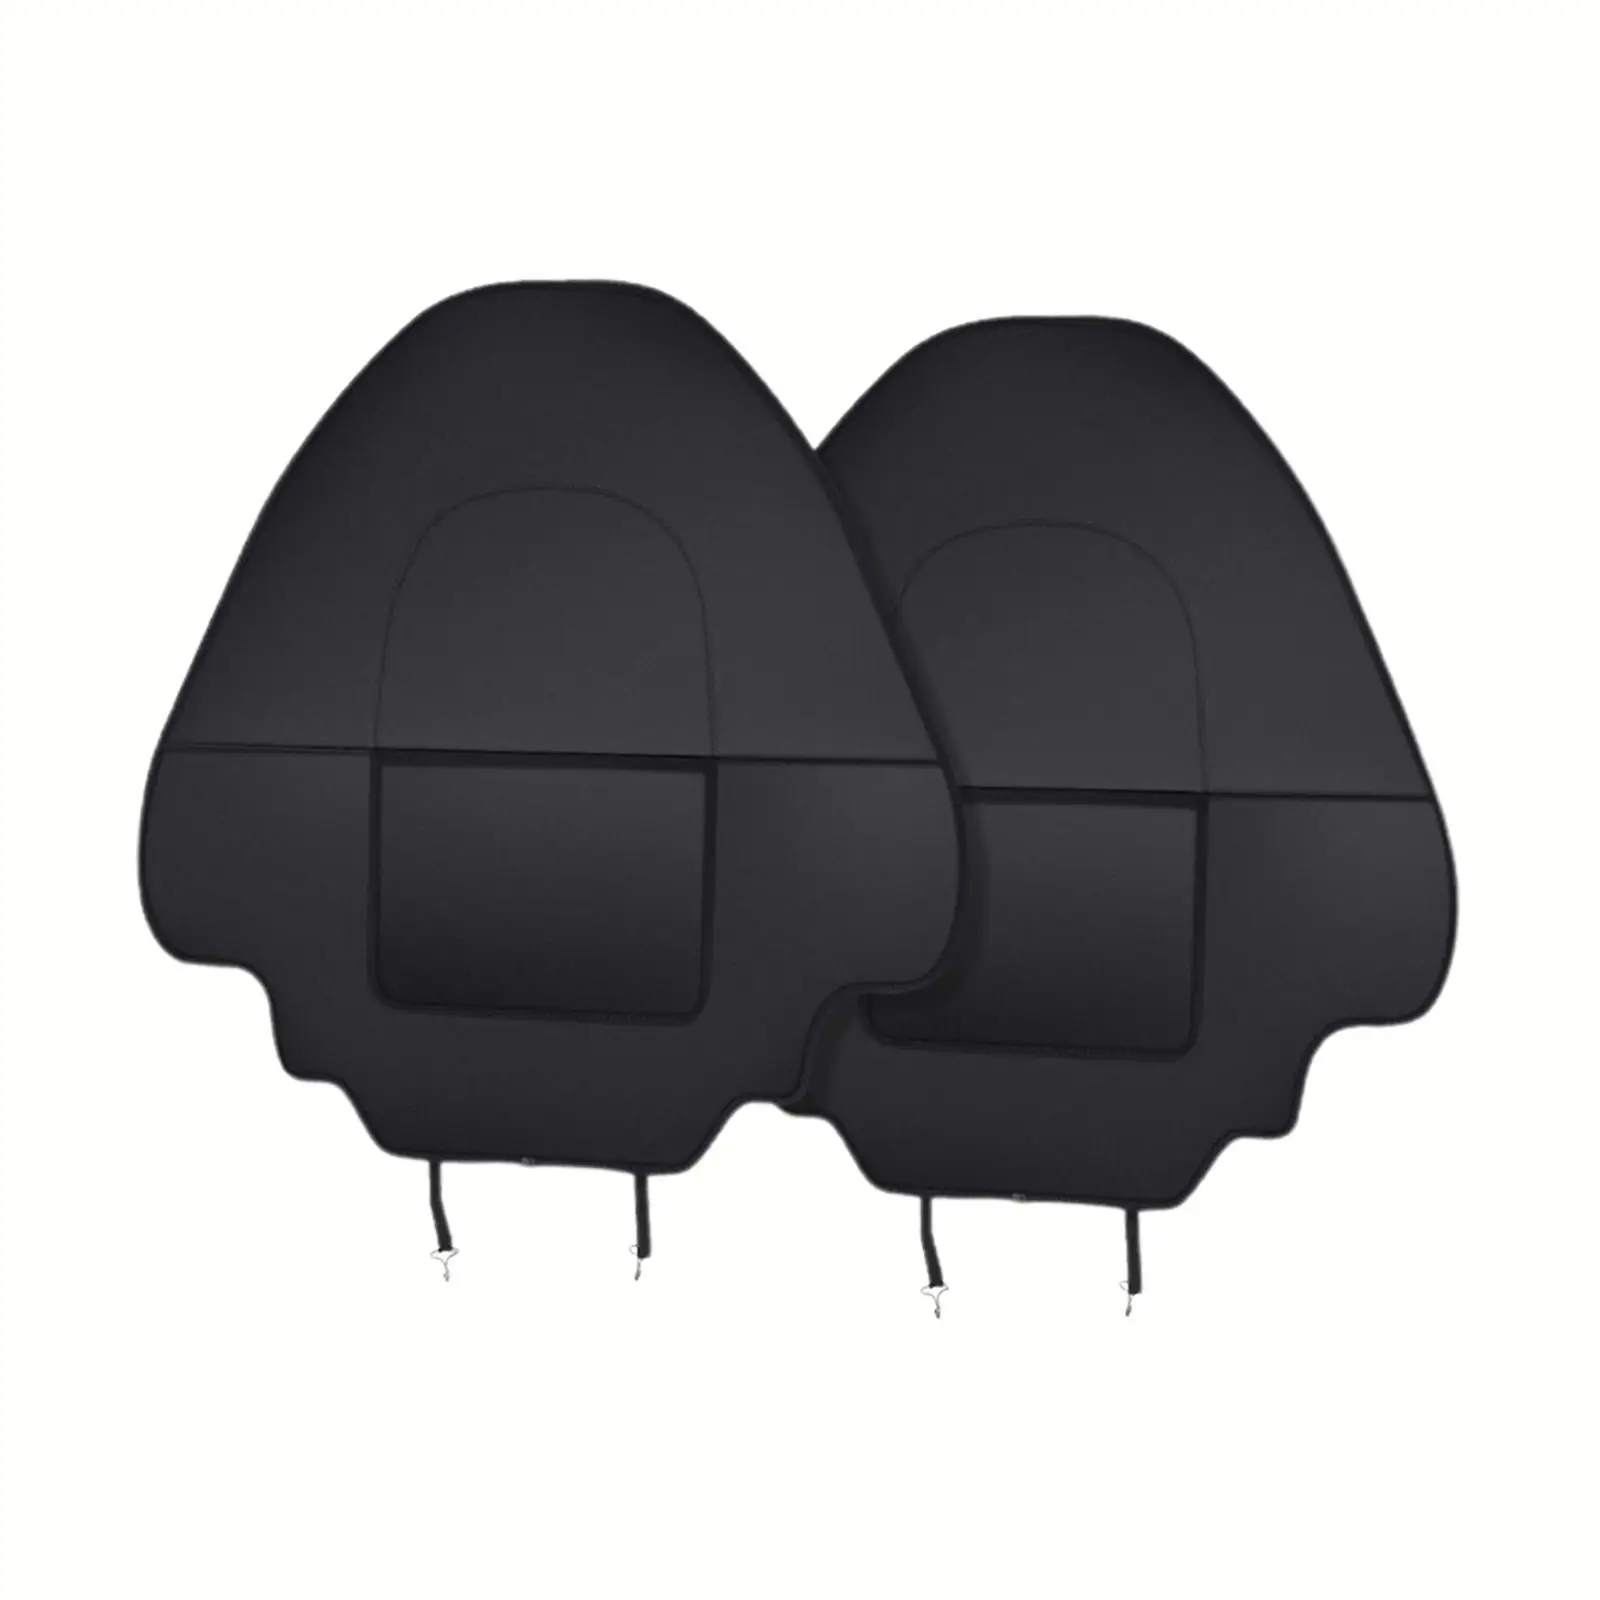 2x Car Seat Back Protector Anti Kick Pad Replaces Decoration Backseat Protection Mat High performance Parts Durable Premium